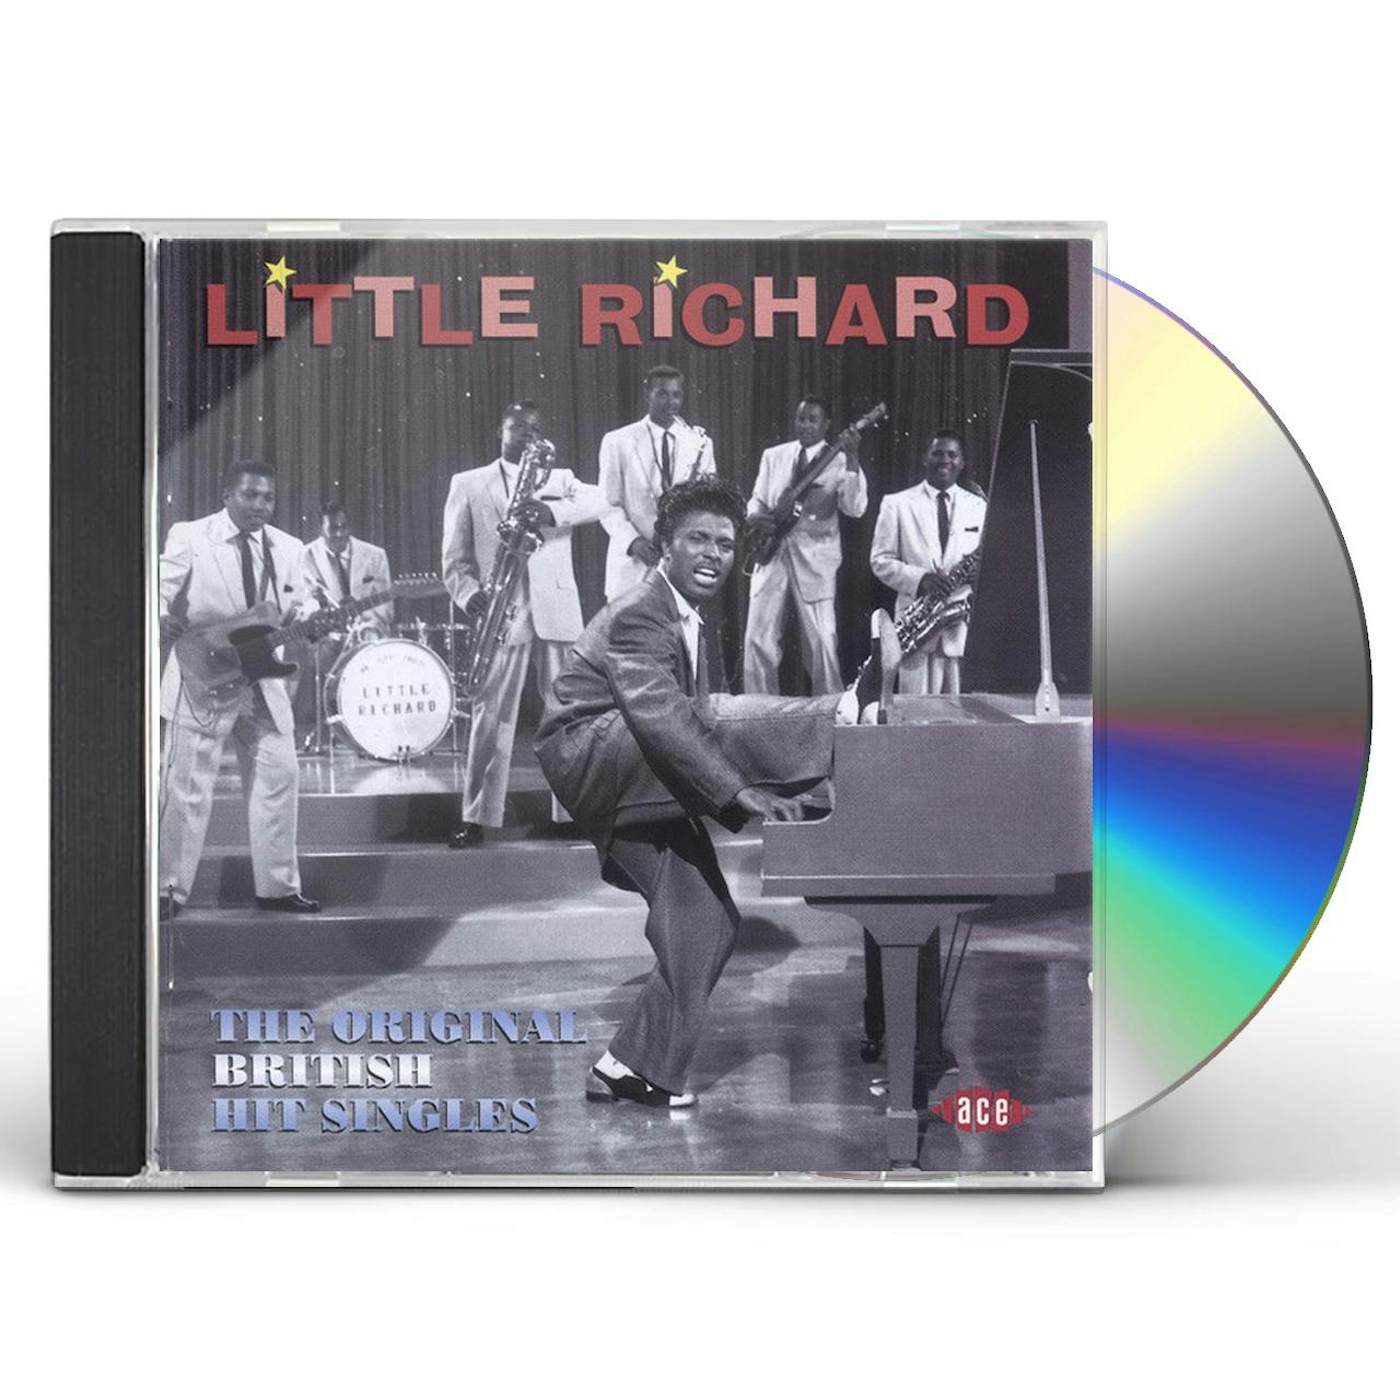 Little Richard ORIGINAL BRITISH HIT SINGLES CD